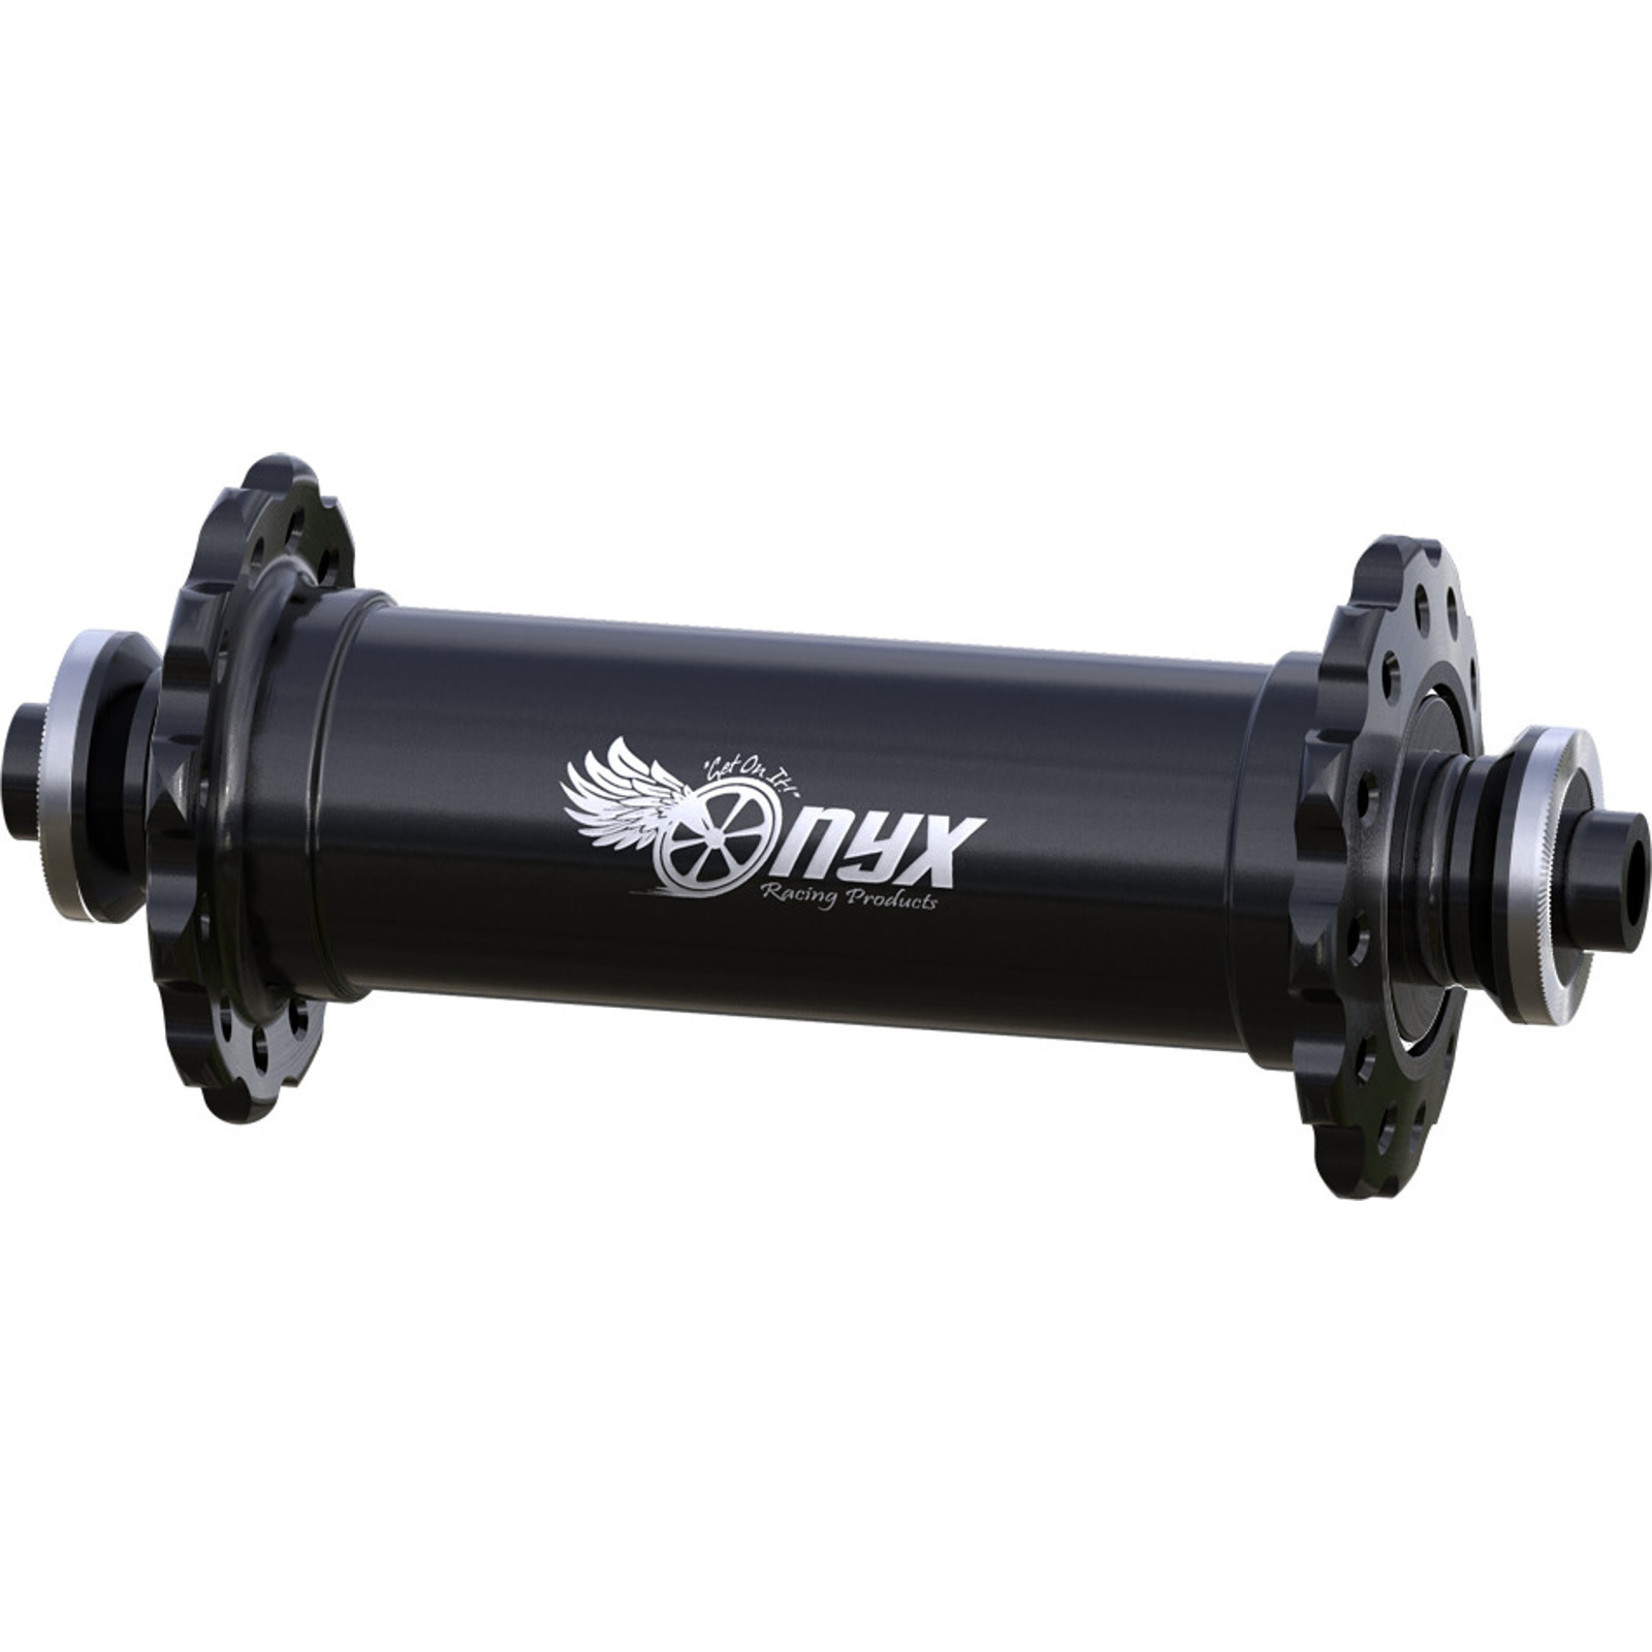 ONYX Racing Products Onyx Vesper Front Hub - QR x 100mm, Black, 24H